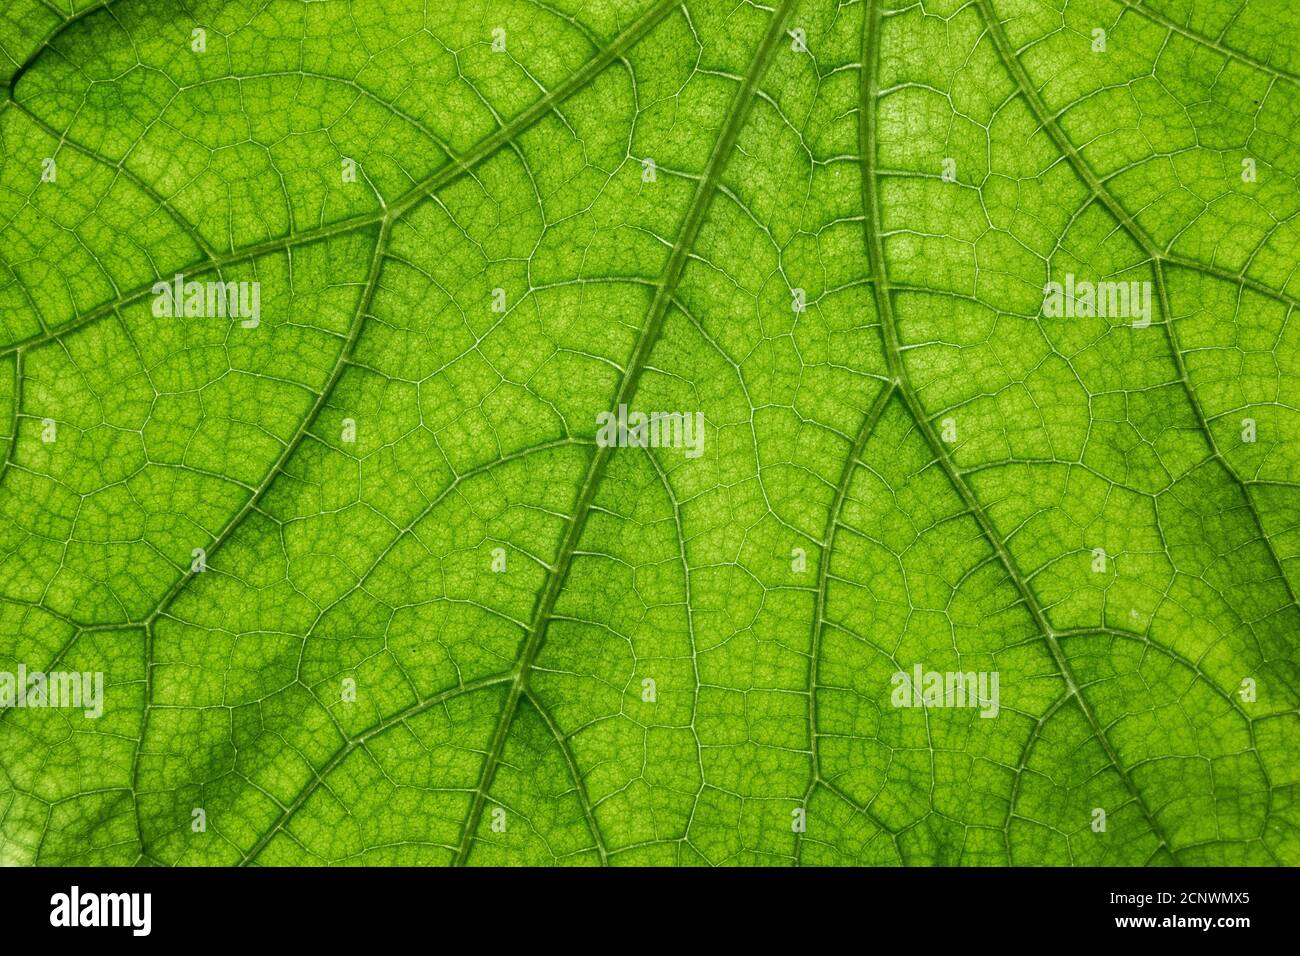 Großes grünes Blatt mit vielen Blattadern Stockfoto